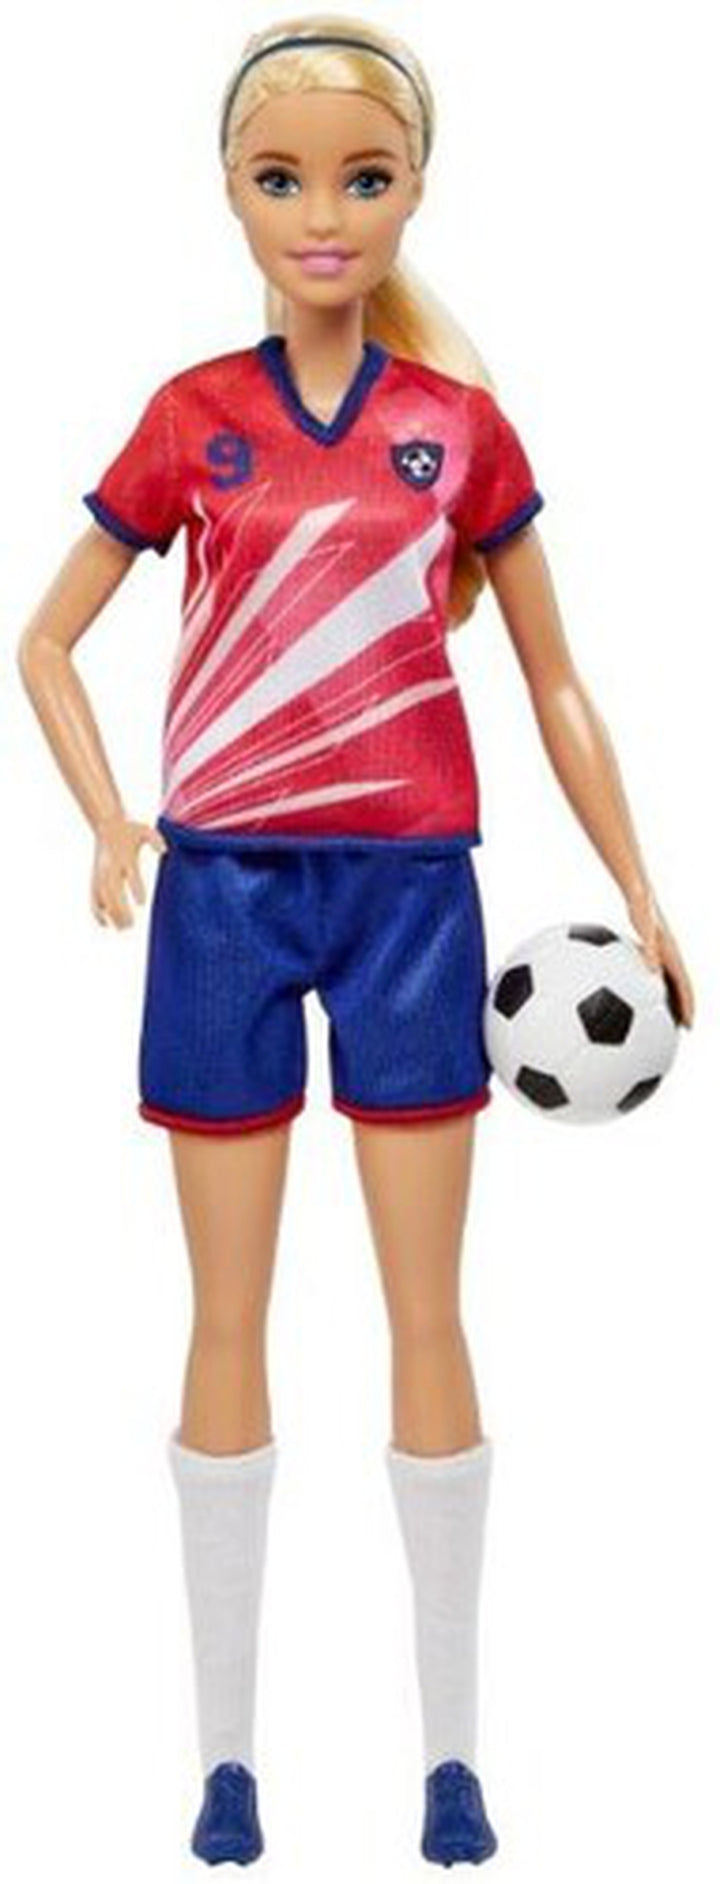 Mattel - Barbie I Can Be Soccer Player, Blonde, Red & Blue Uniform